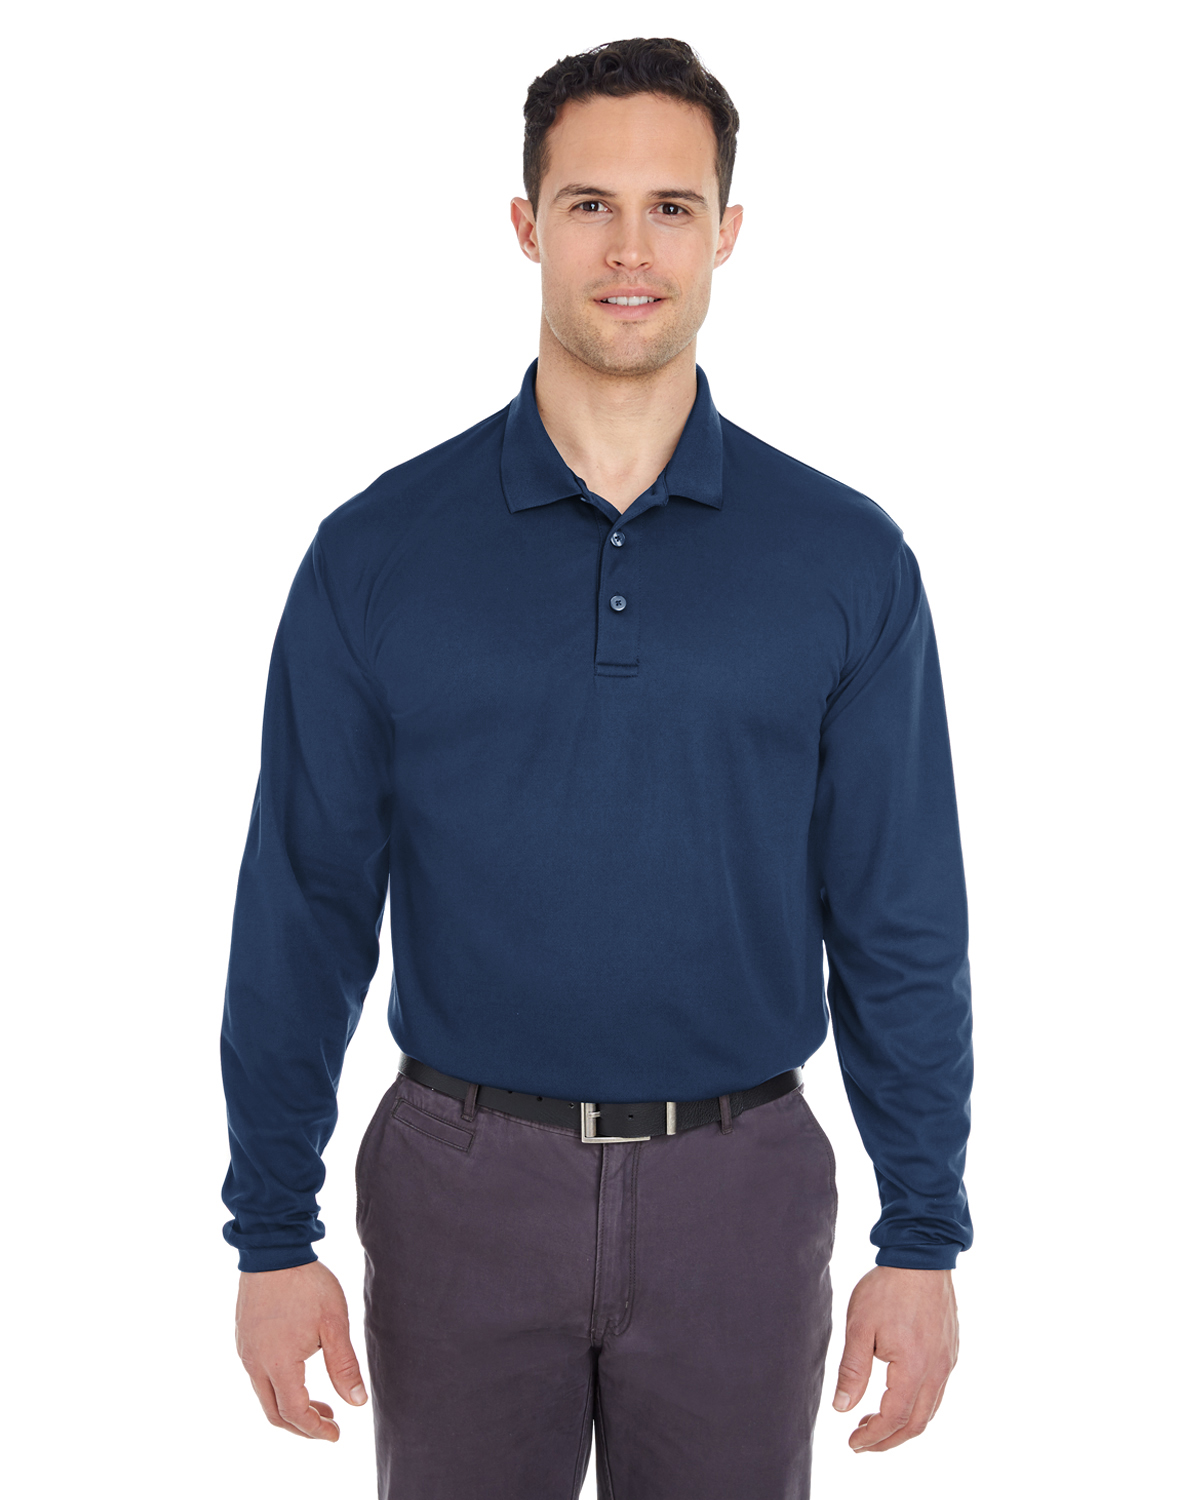 Men’s Long Sleeve Cool/Dry Polo Shirt | Jefferson